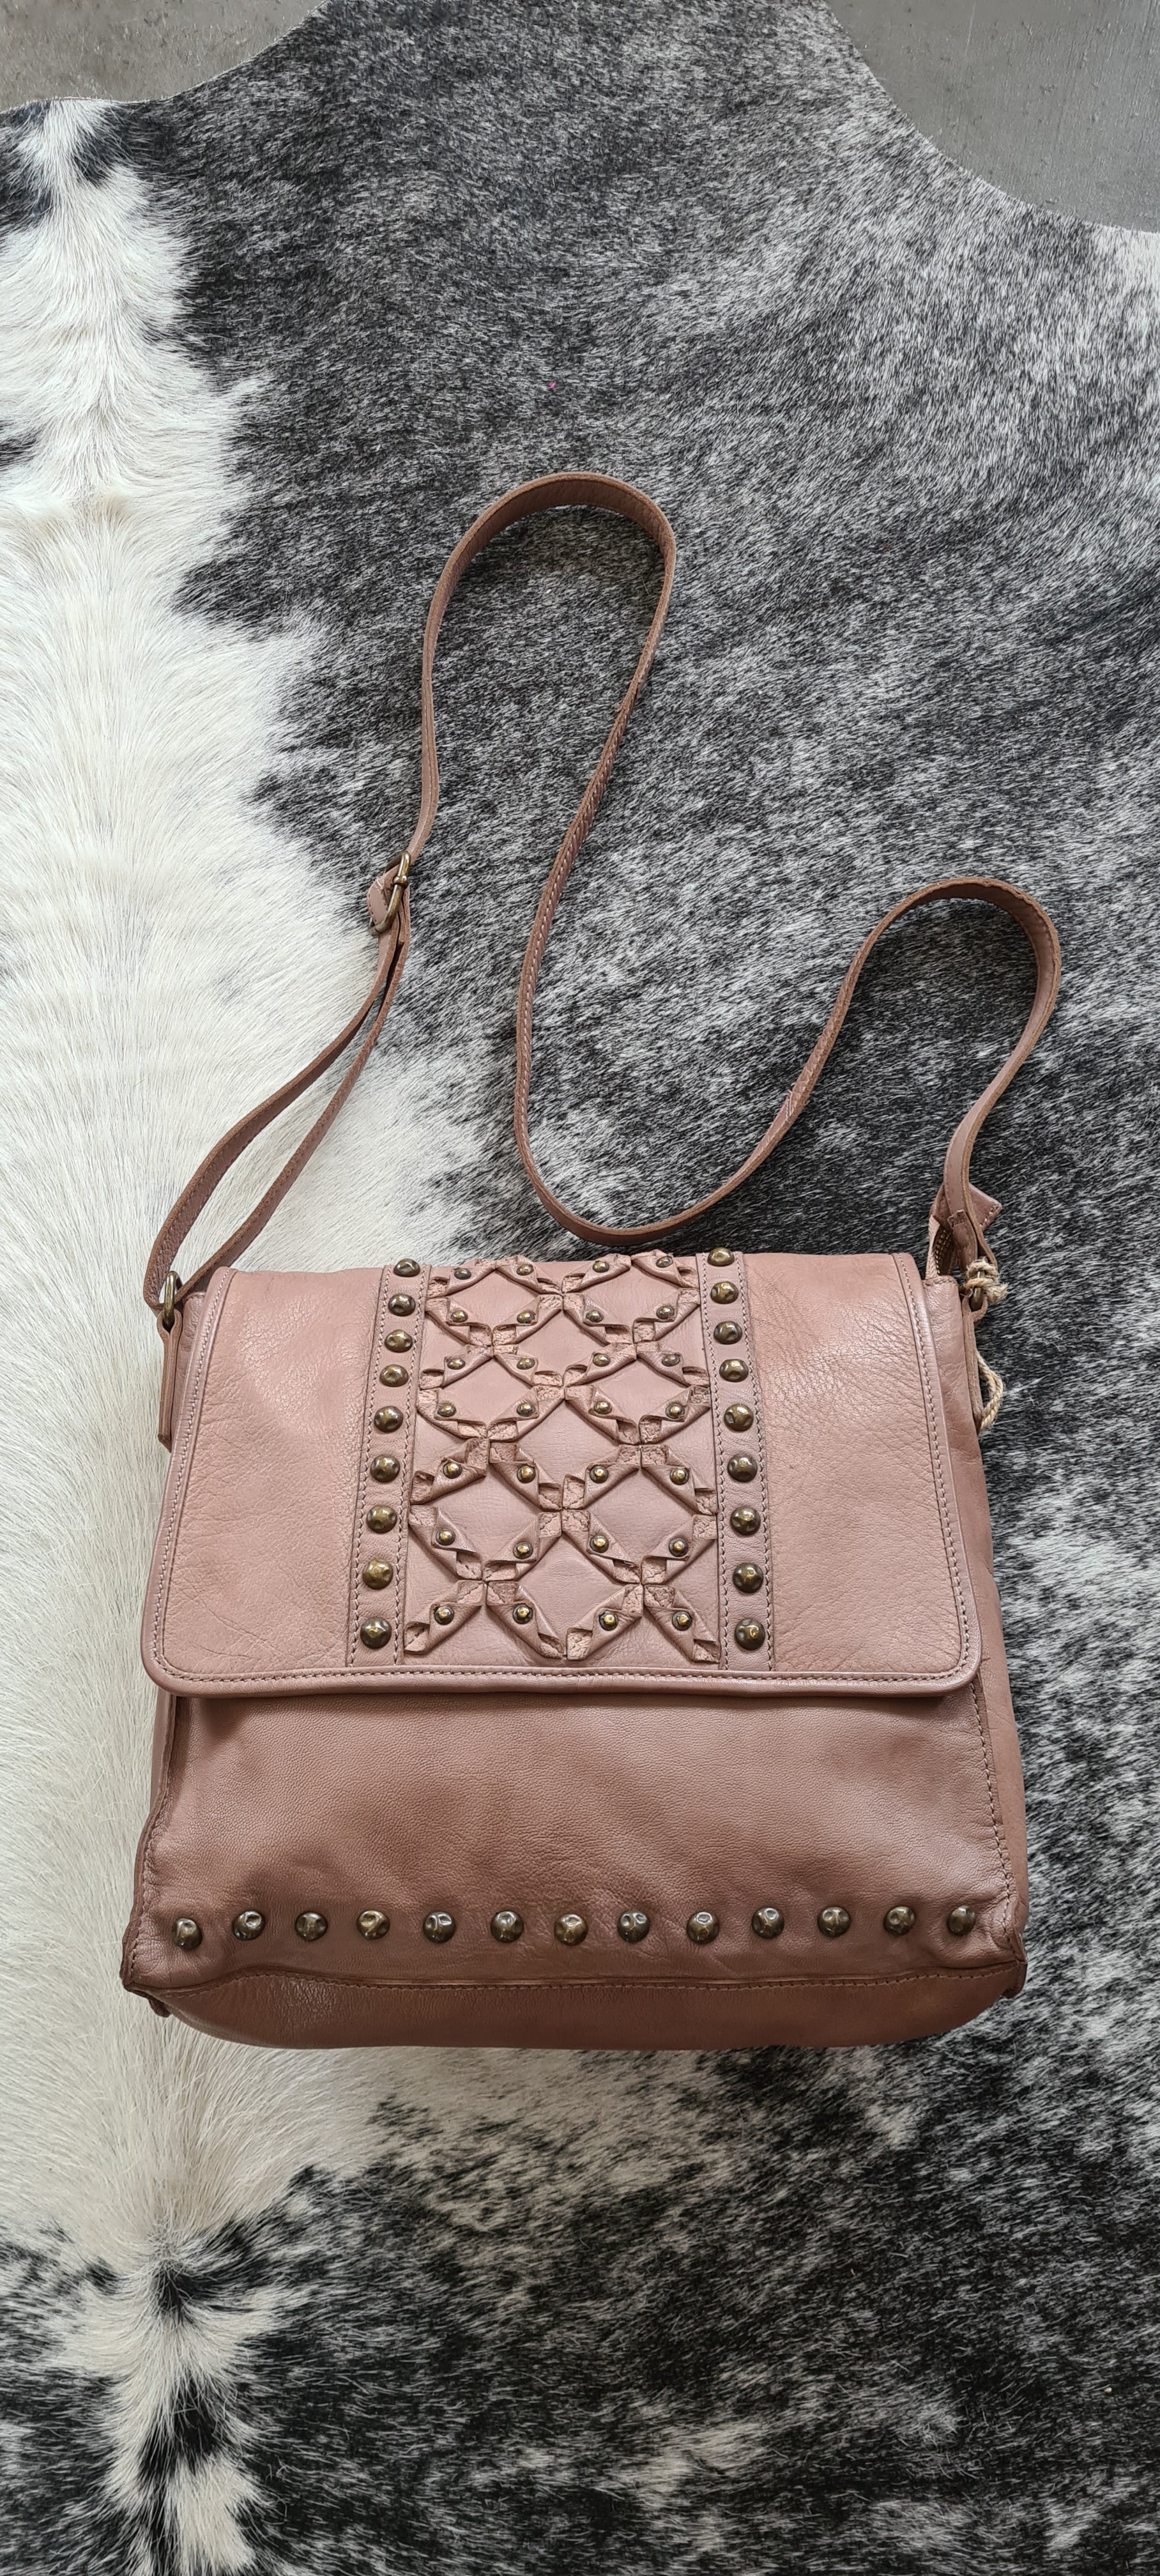 Kompanero Crossbody Pink Studded Leather Handbag